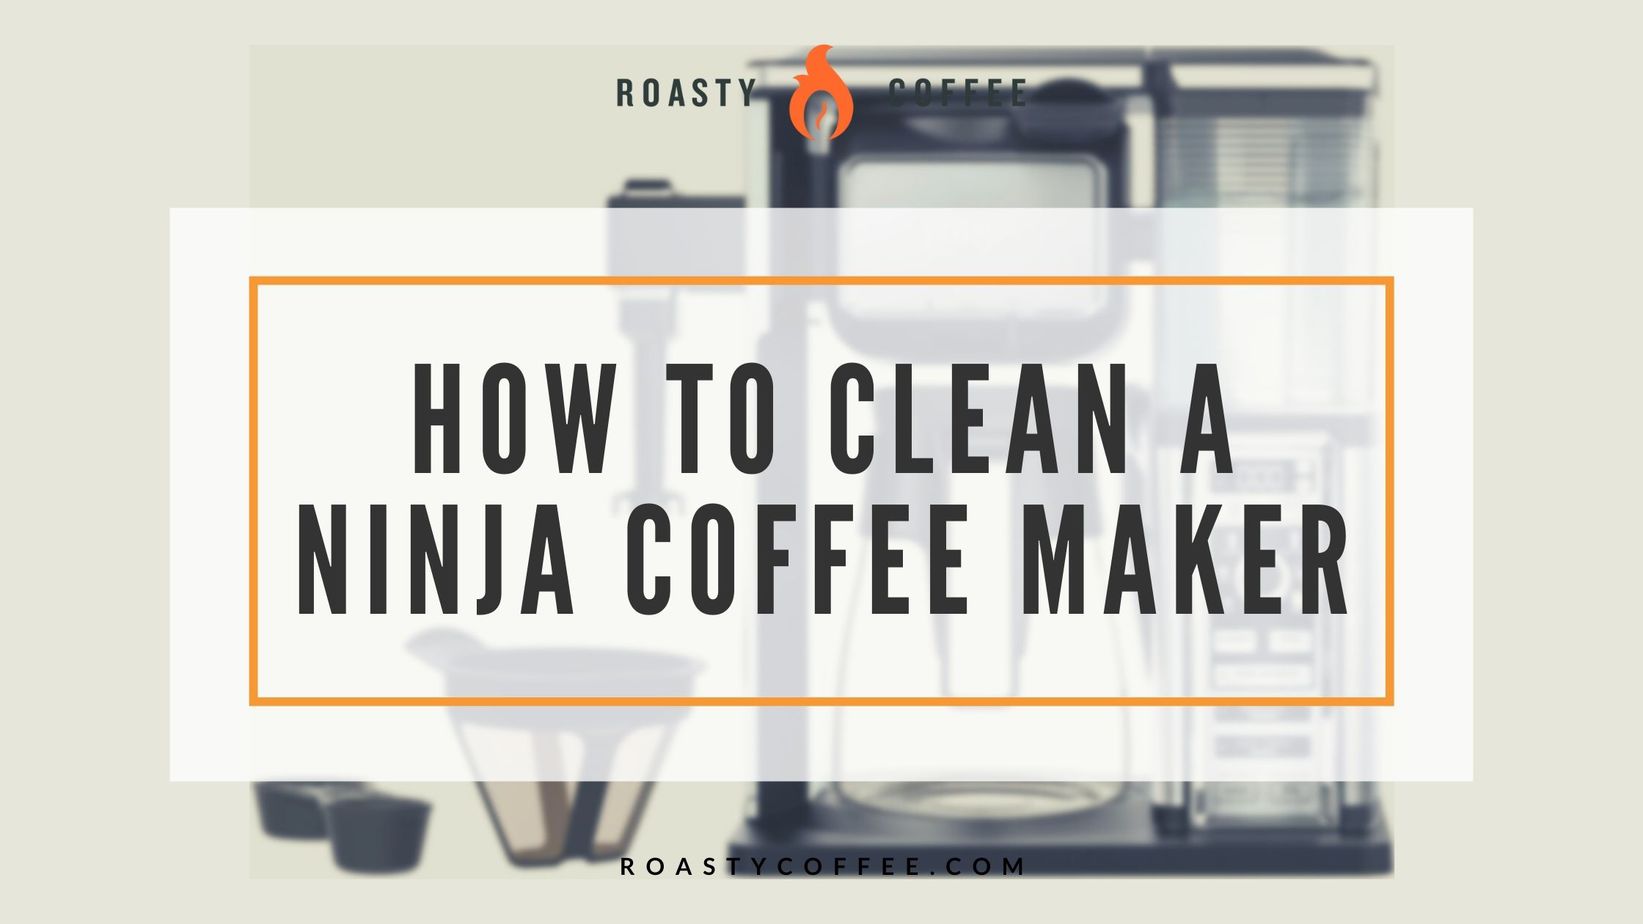 https://www.roastycoffee.com/wp-content/uploads/How-To-Clean-A-Ninja-Coffee-Maker.jpg